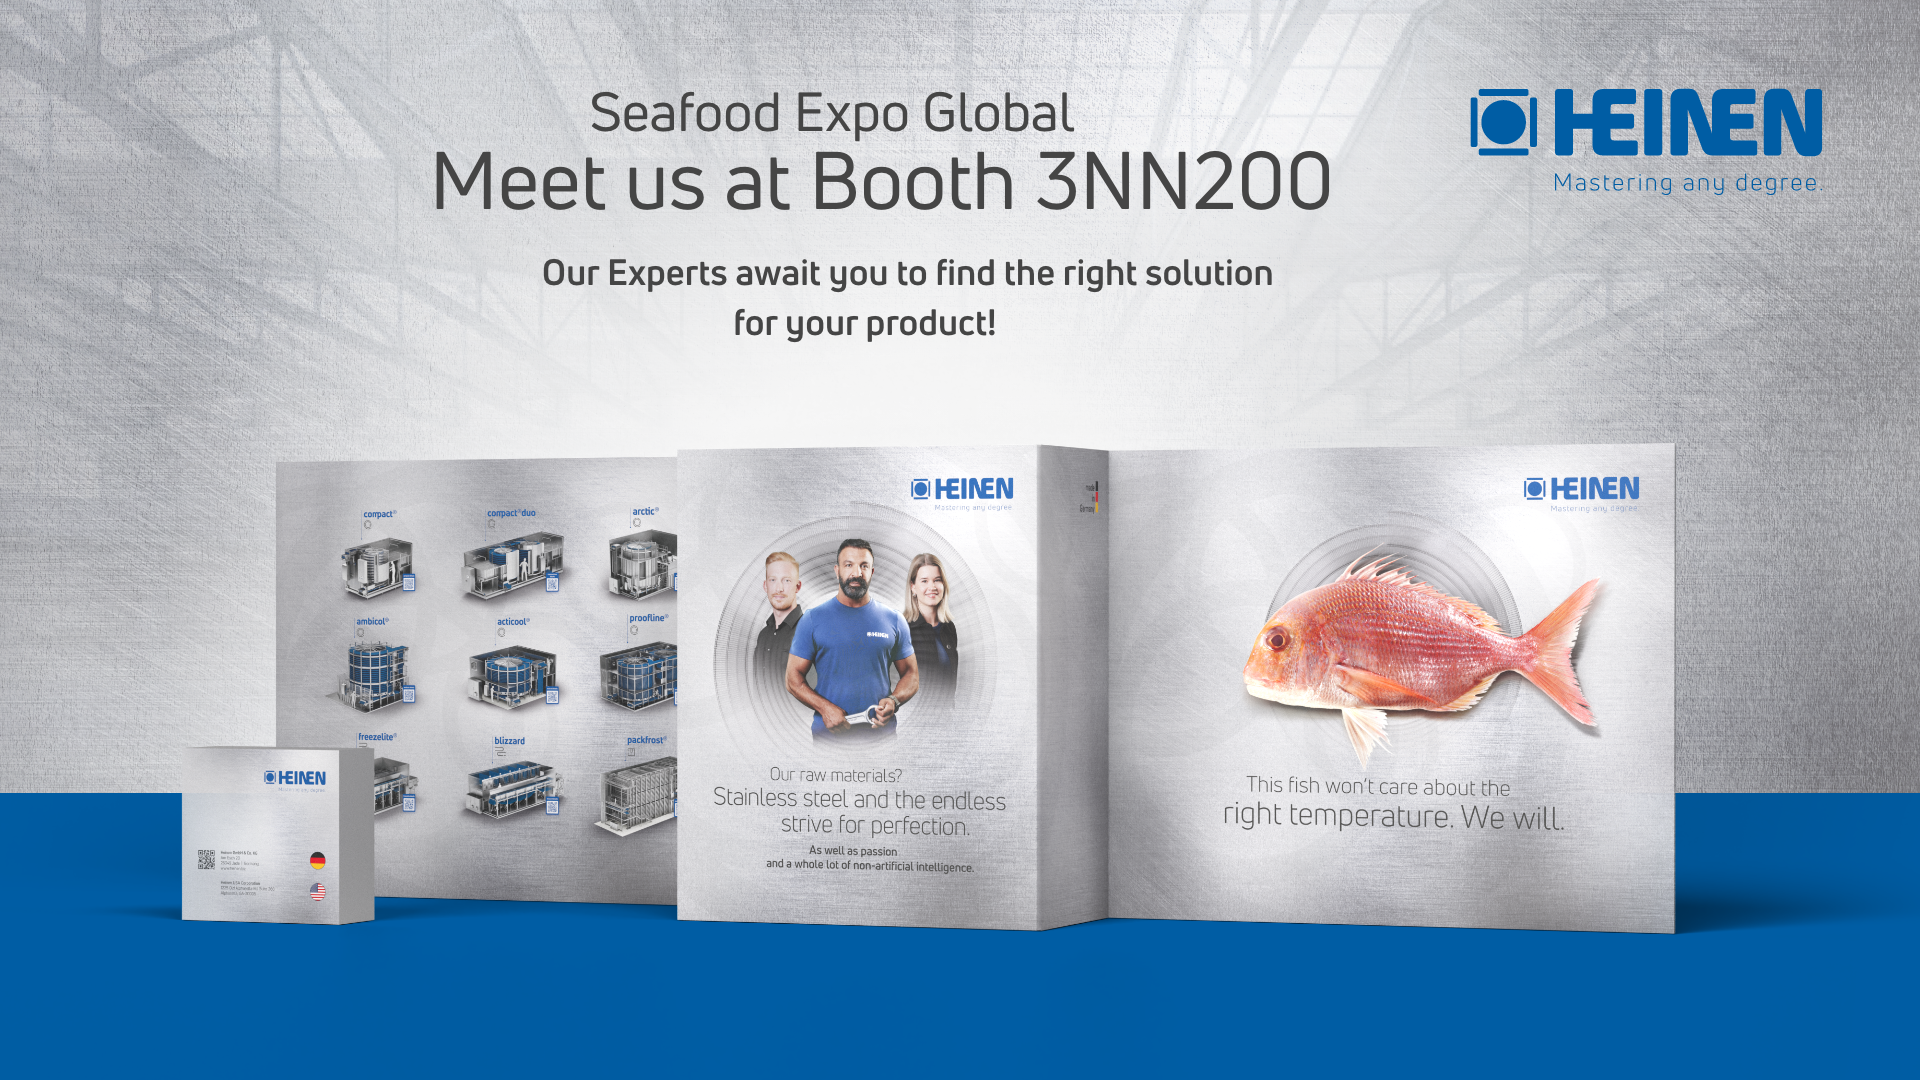 Meet us at Booth
3NN200 Seafood Expo Global